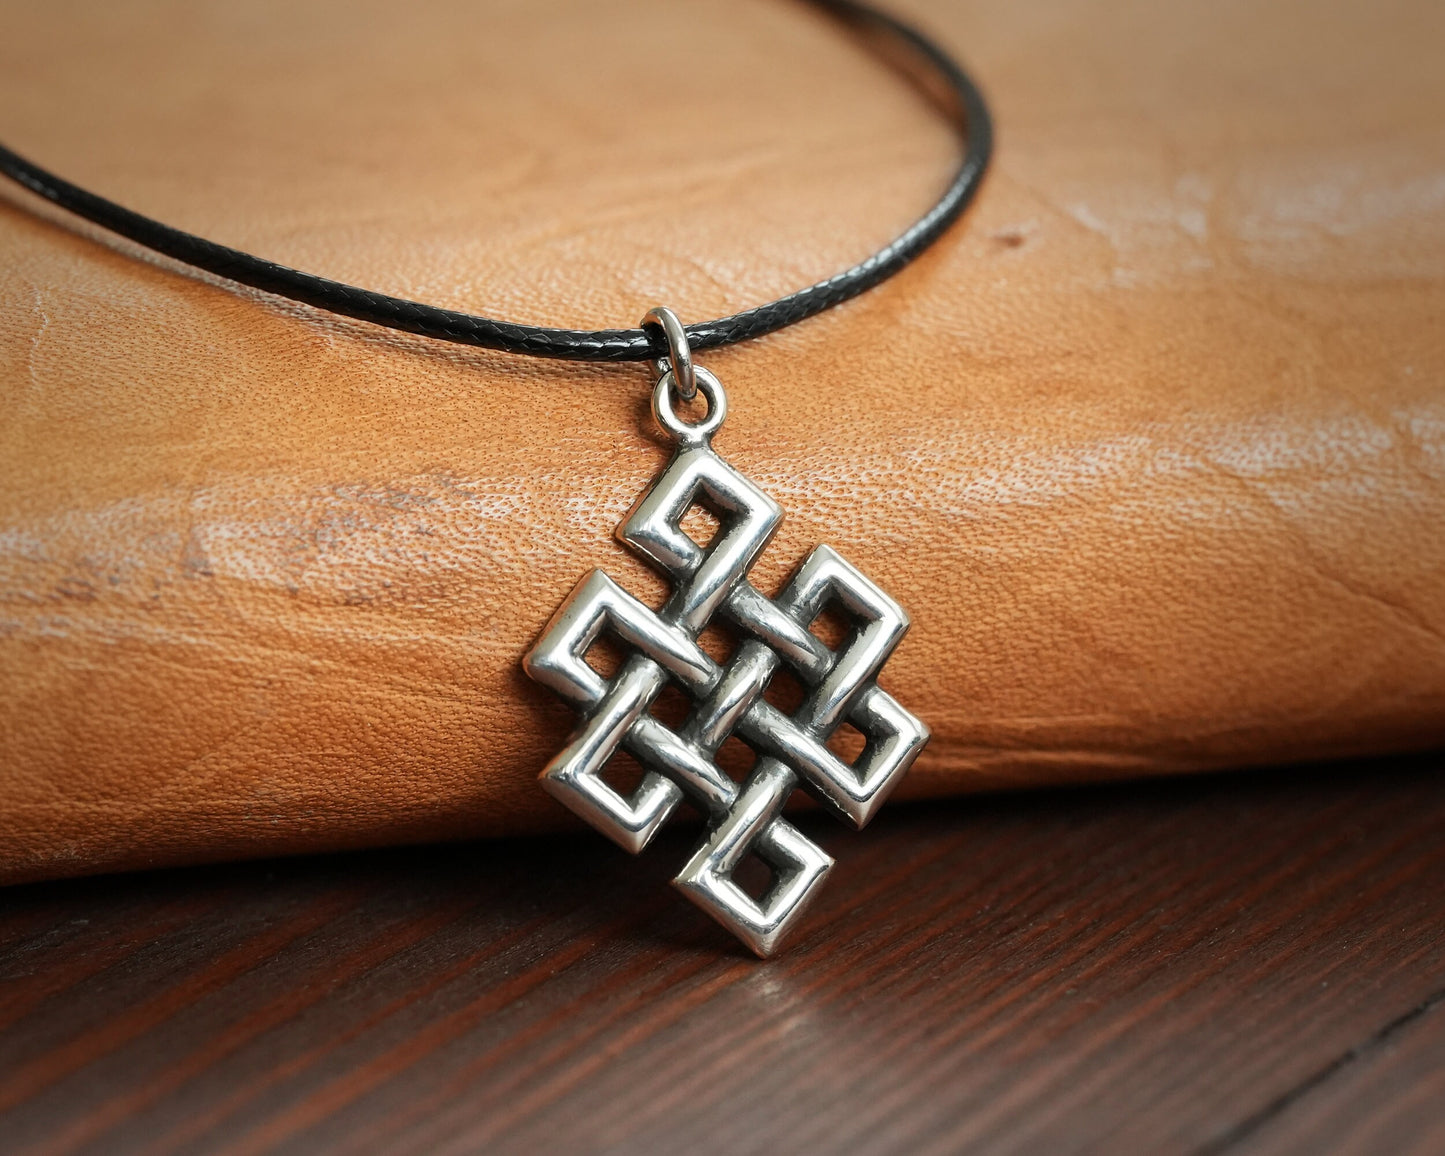 Handmade Tibetan Endless Love Knot Necklace Pendant for Women Japanese Meaningful Meditation Buddhist Jewelry With Adjustable String - Baldur Jewelry